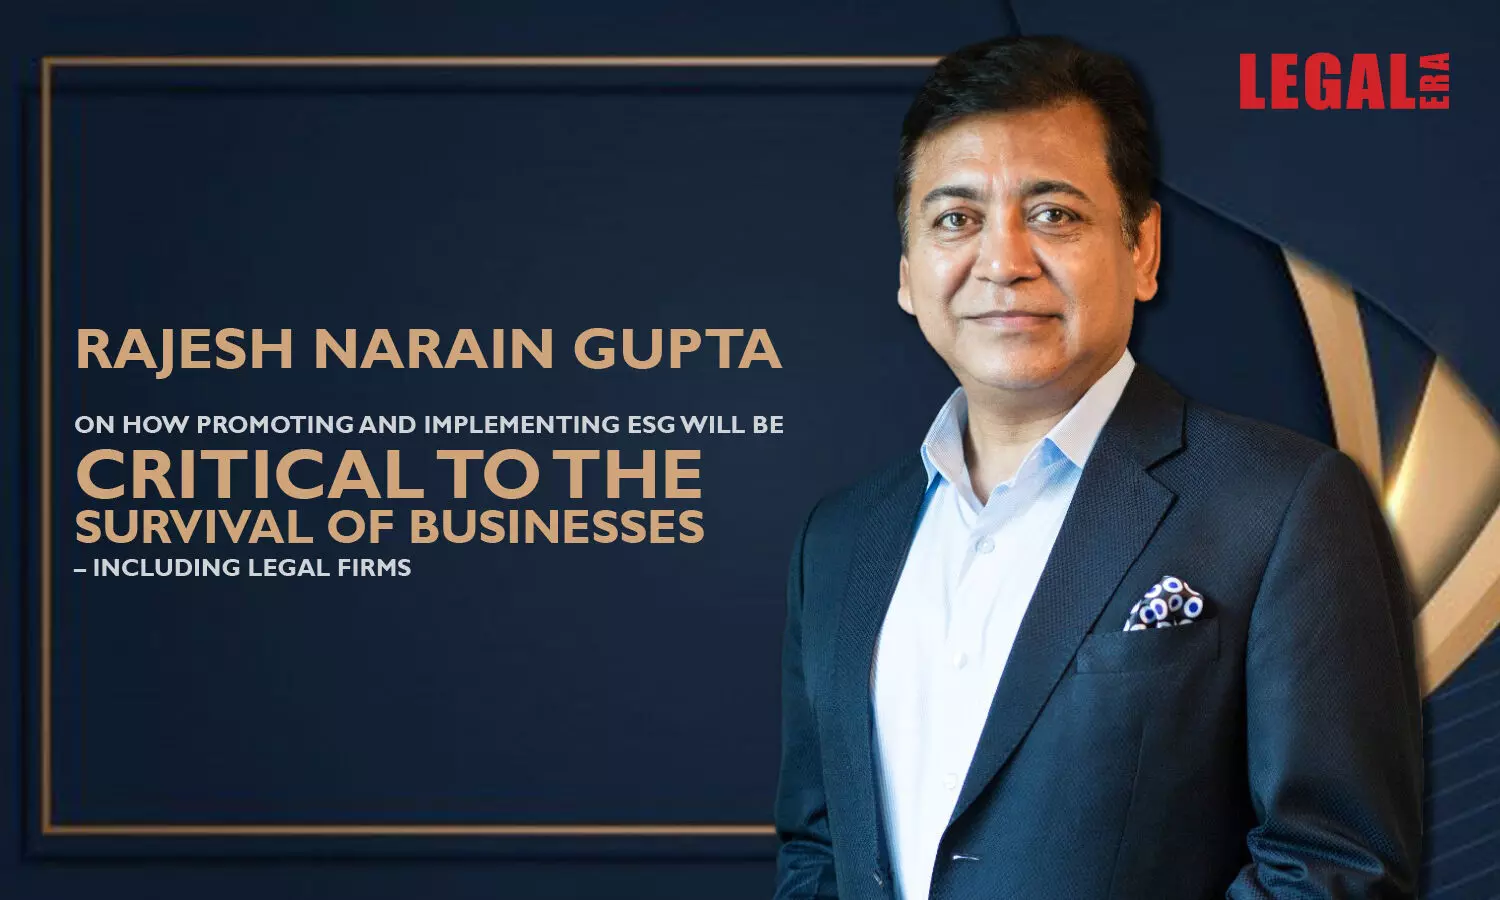 Legal Era in conversation with Rajesh Narain Gupta